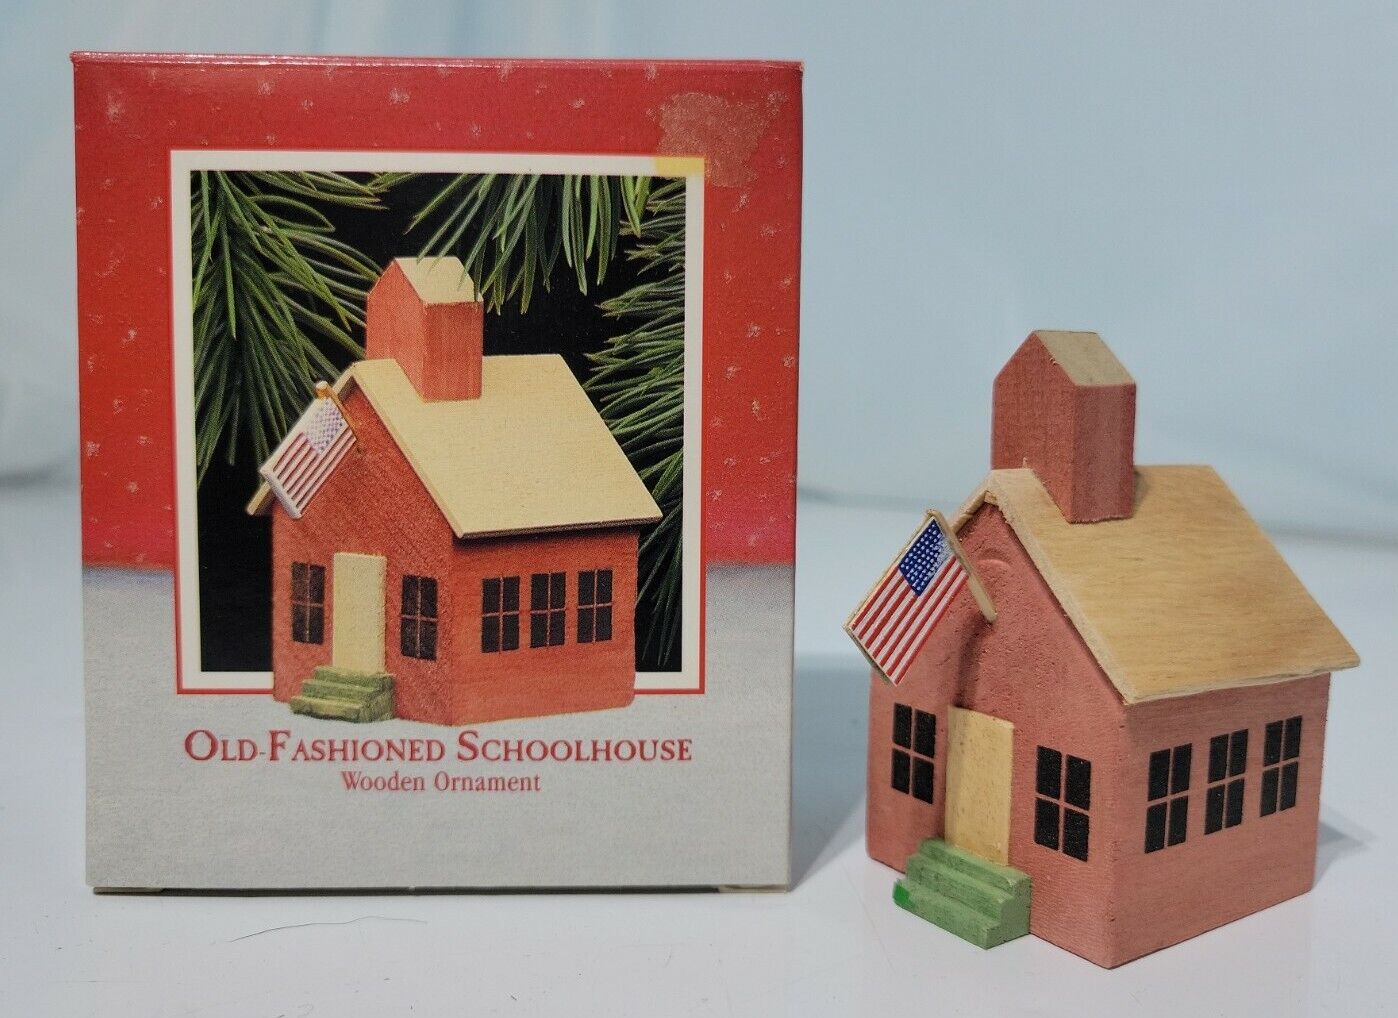 Hallmark Keepsake Ornament “Old- Fashioned Schoolhouse”. Wooden Ornament 1988